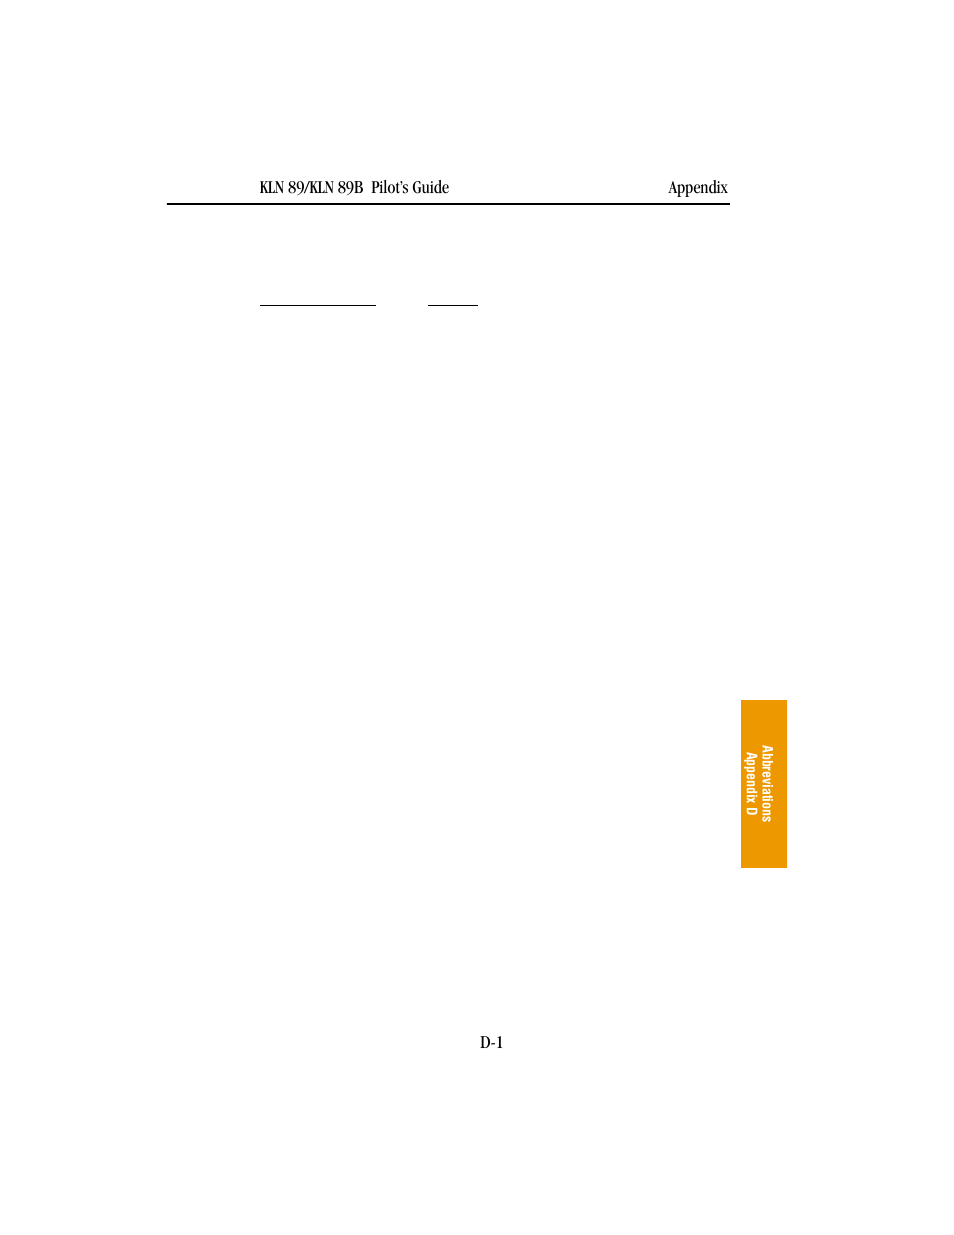 Appendix d - abbreviations, State abbreviations | BendixKing KLN 89B - Pilots Guide User Manual | Page 208 / 246